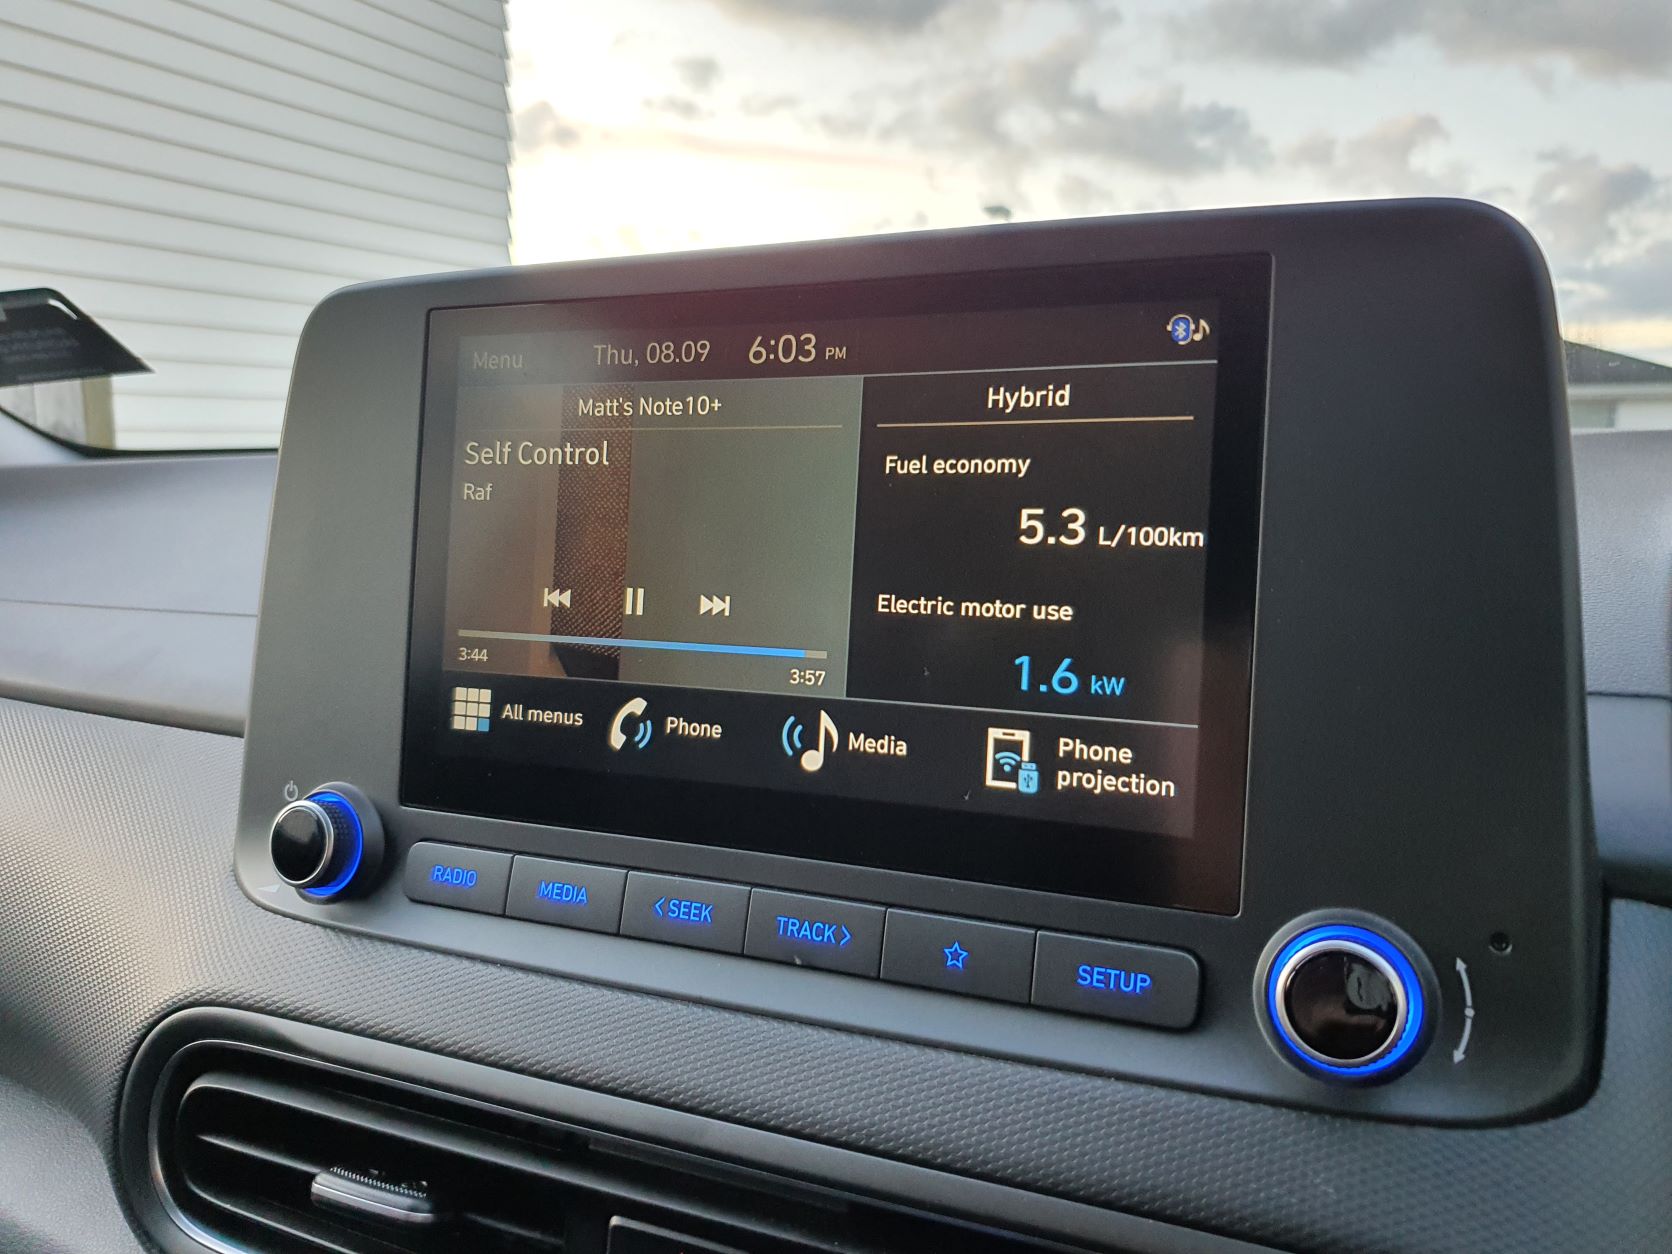 Media view on the infotainment screen of the 2022 Hyundai Kona Hybrid